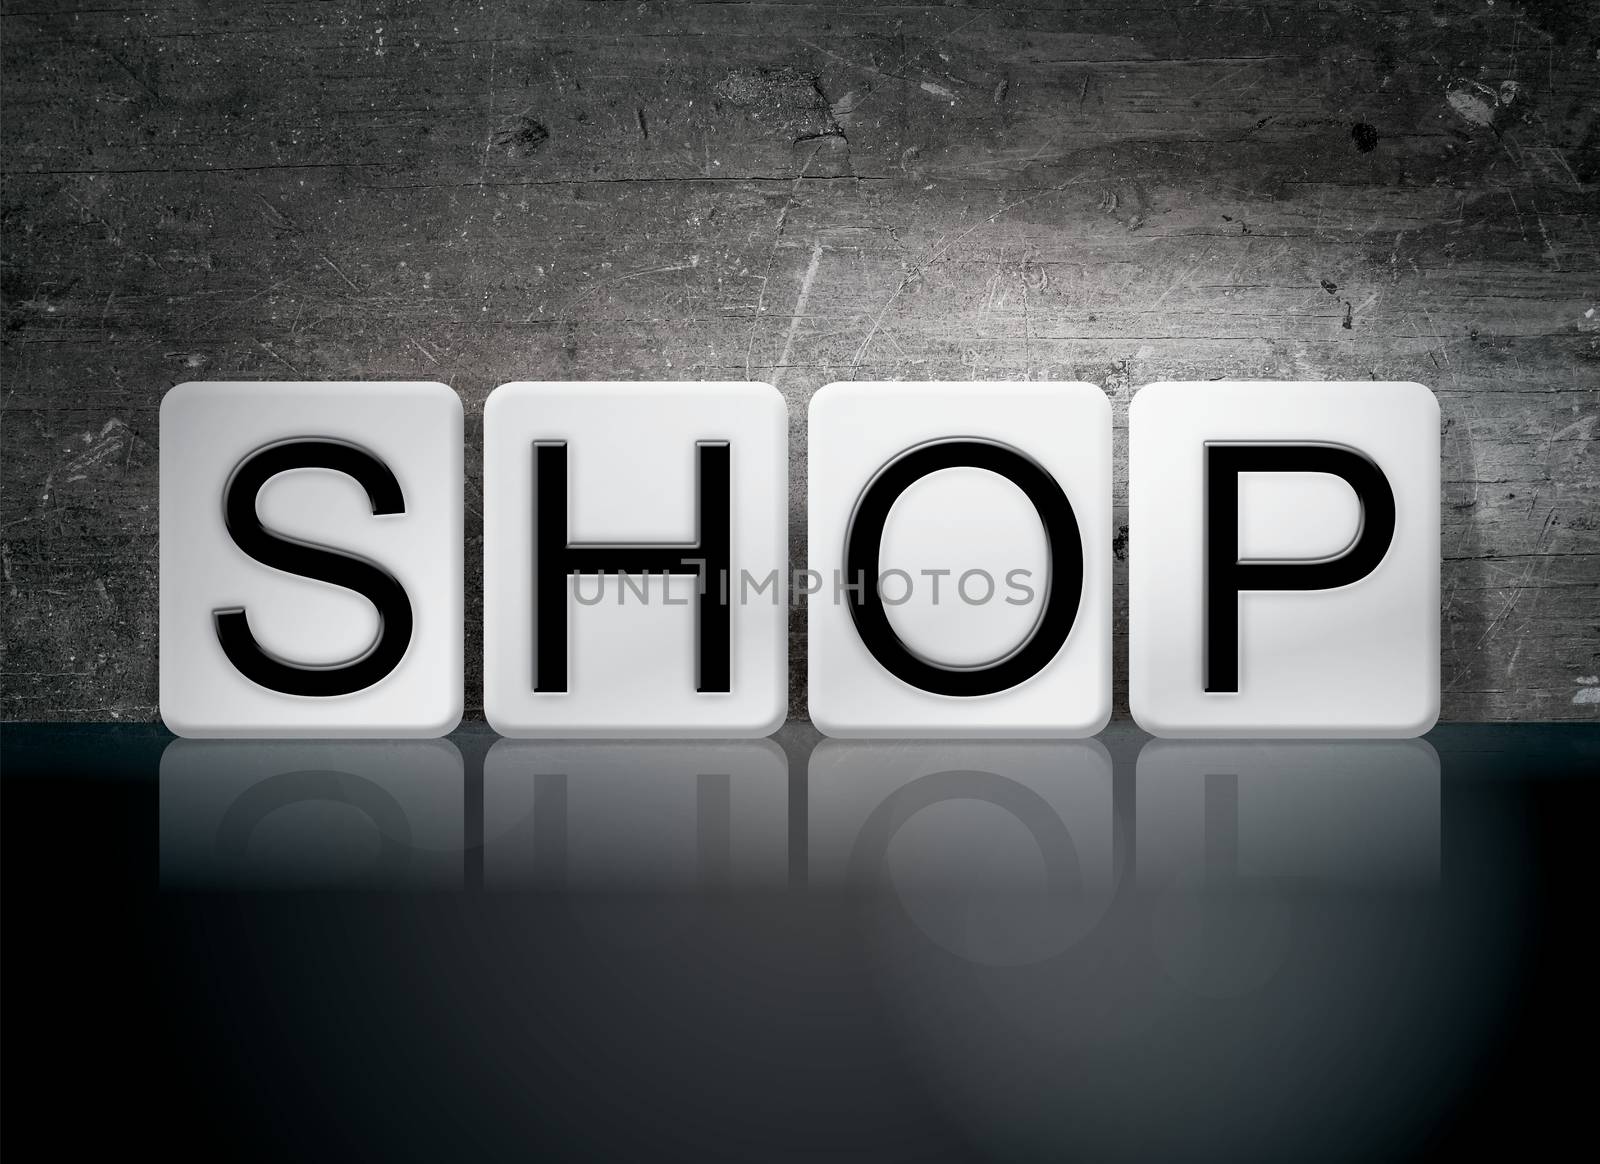 The word "Shop" written in white tiles against a dark vintage grunge background.